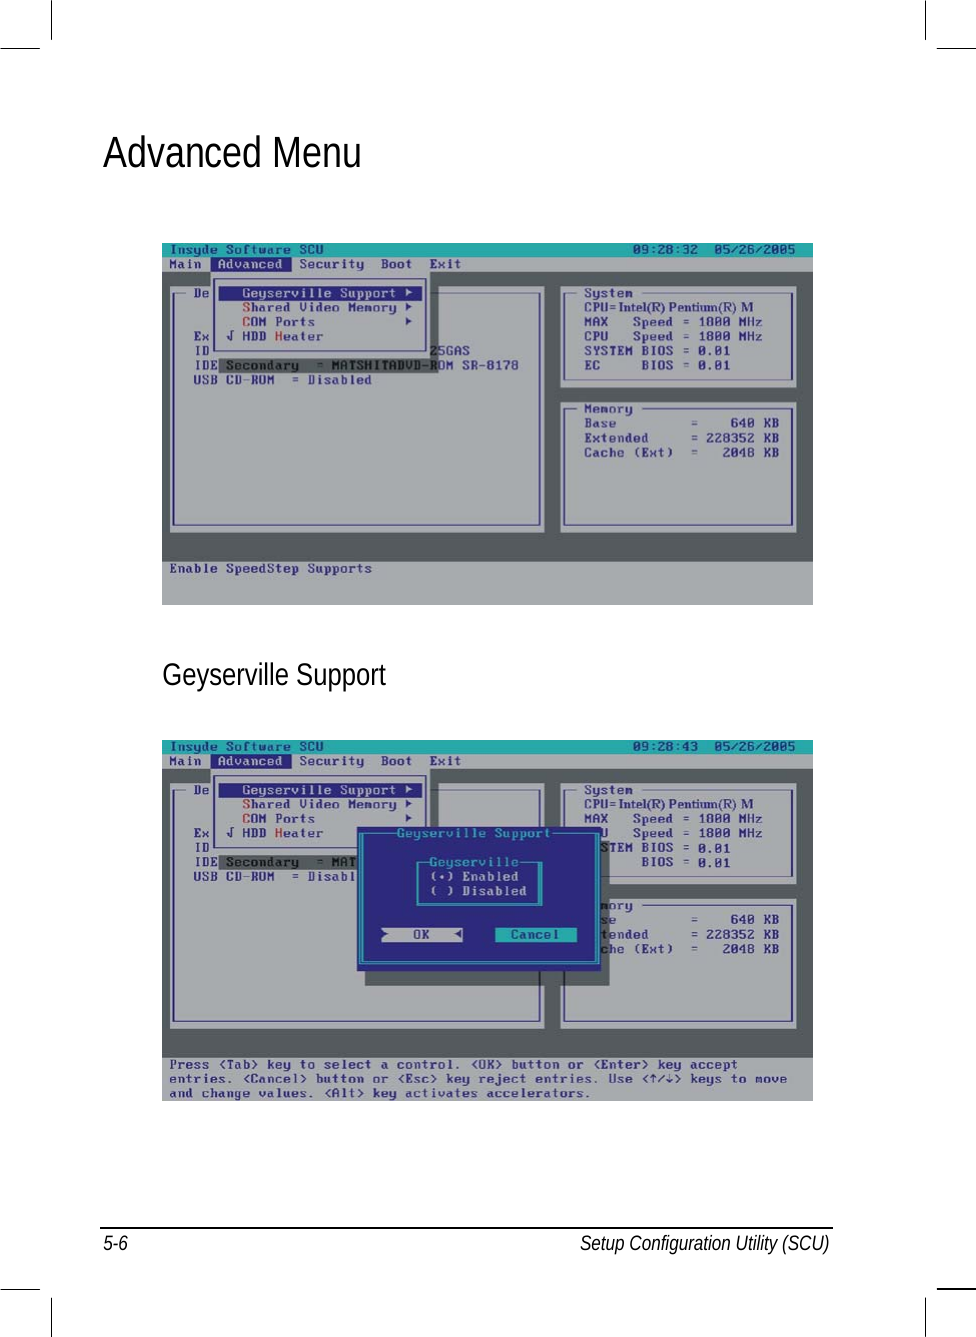  5-6  Setup Configuration Utility (SCU) Advanced Menu  Geyserville Support   